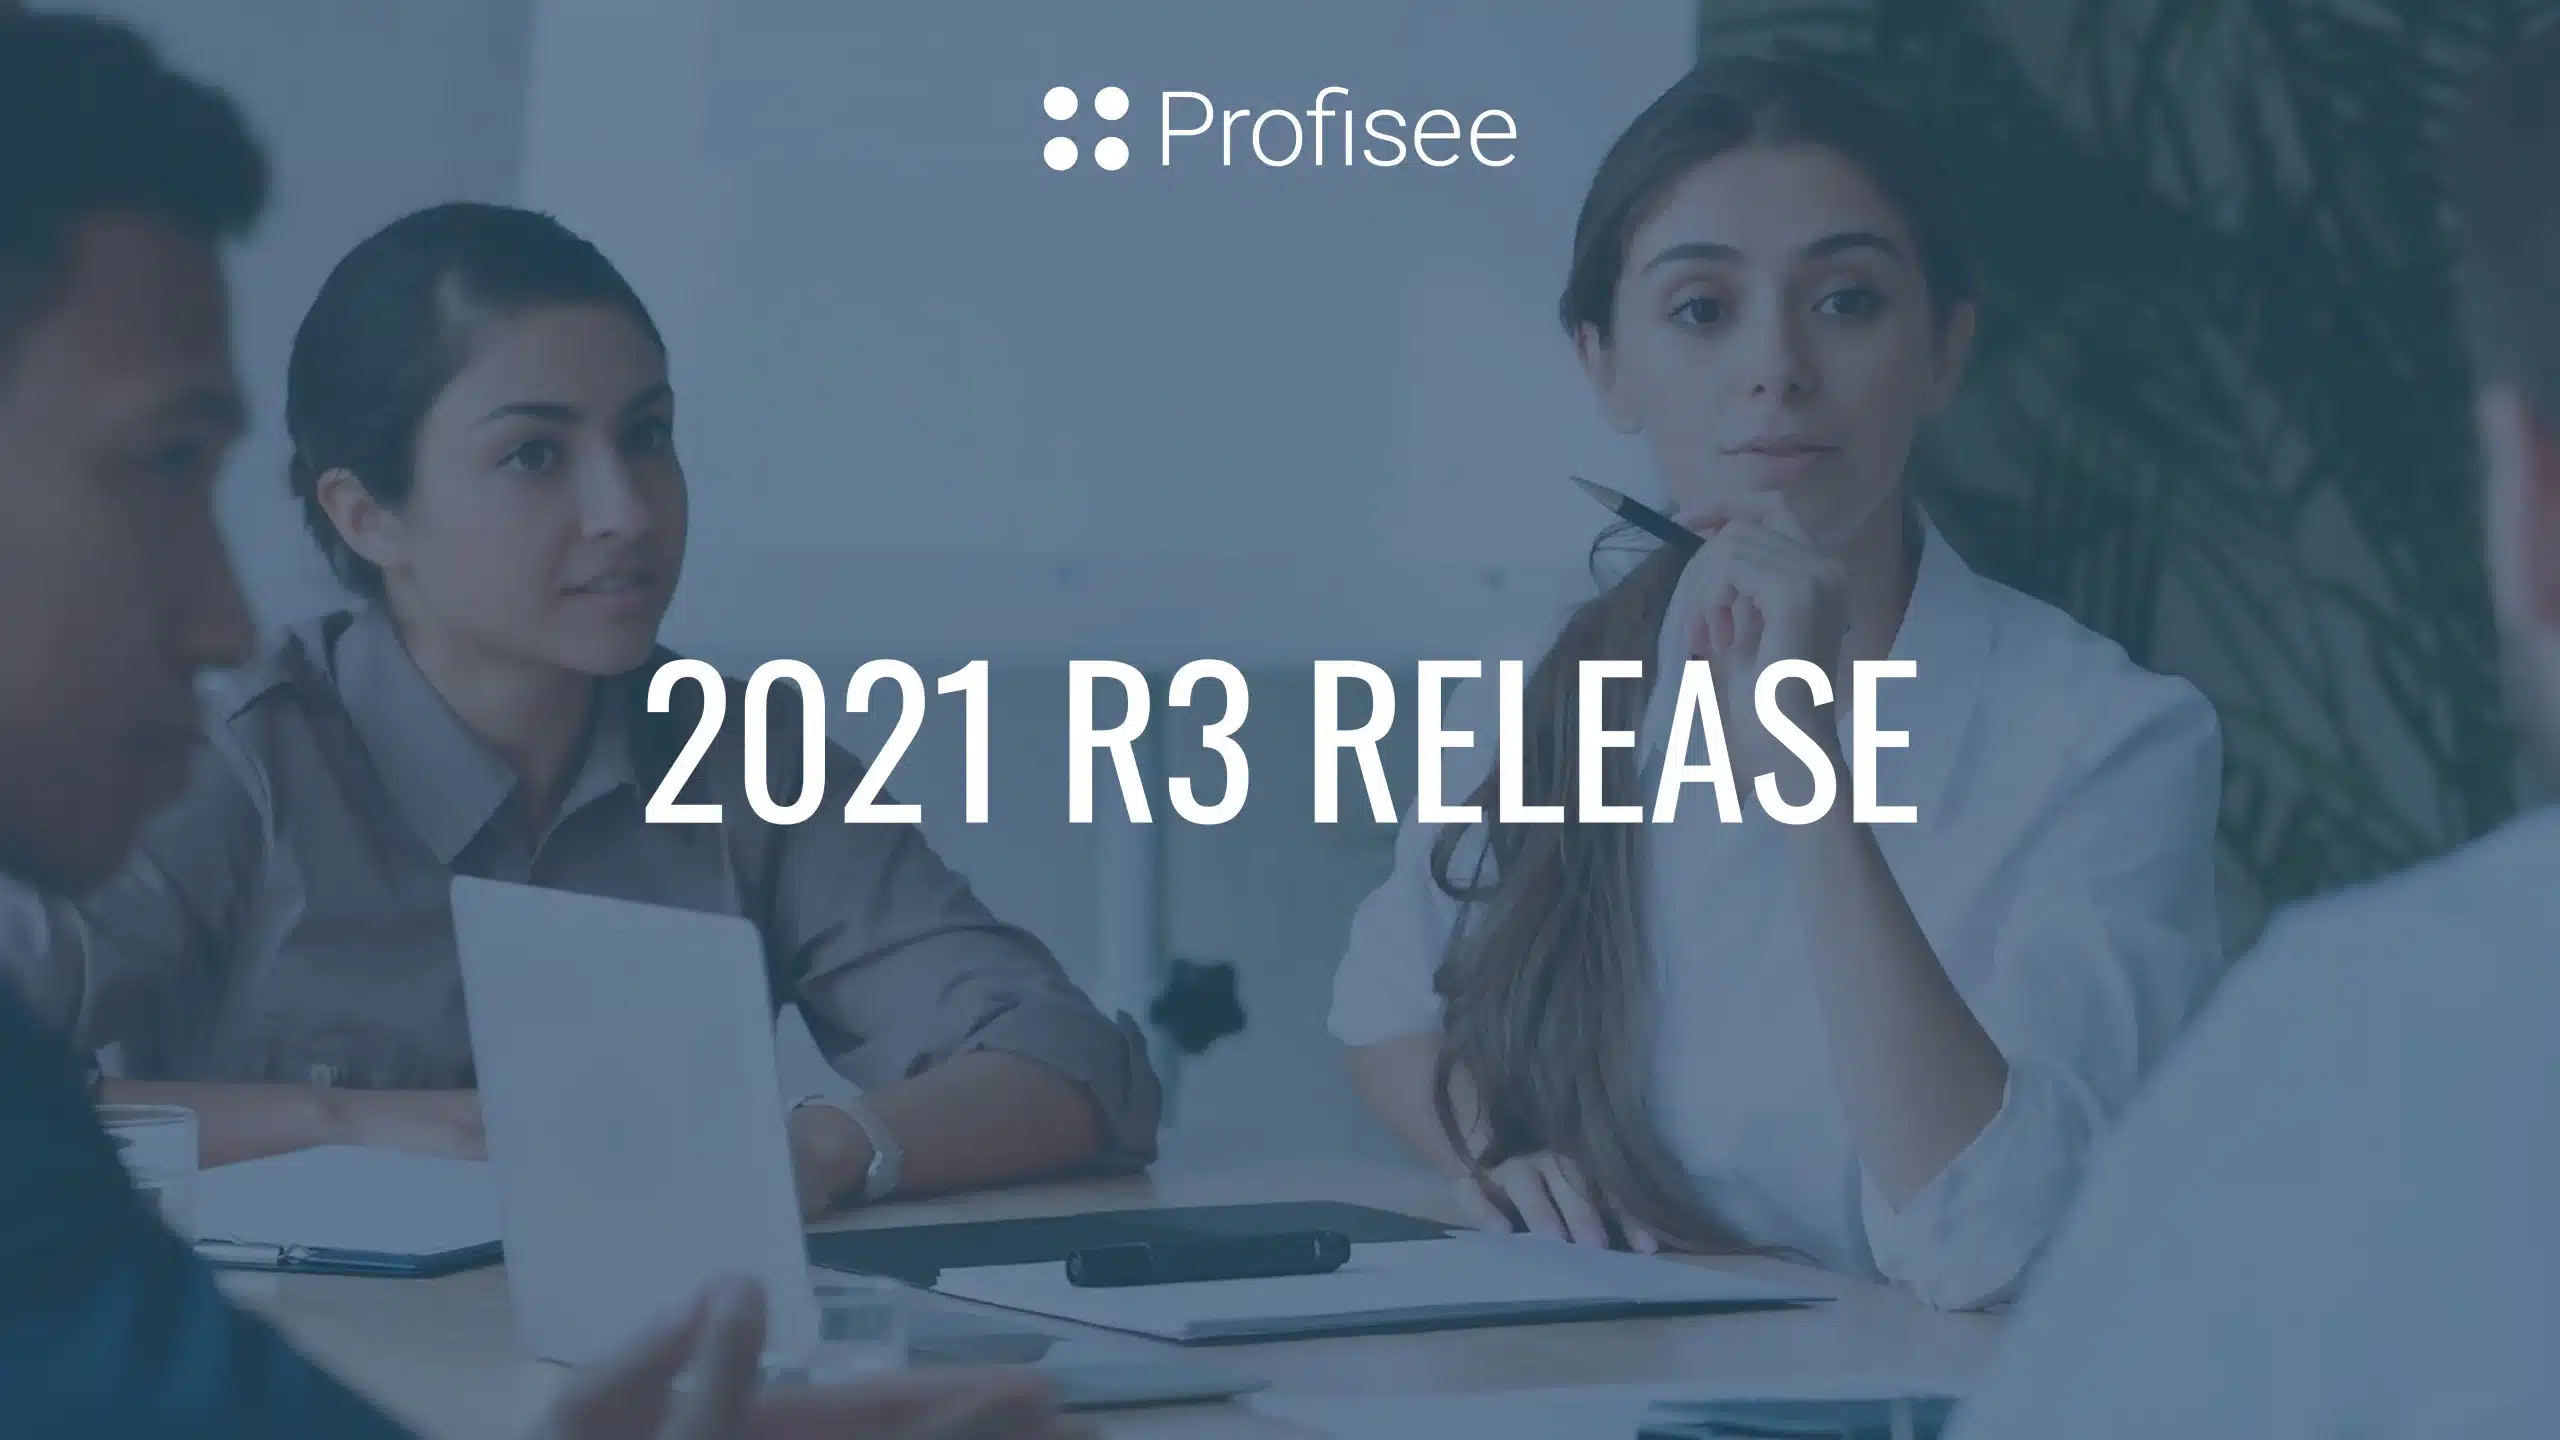 Profisee Announces New Release: 2021 R3